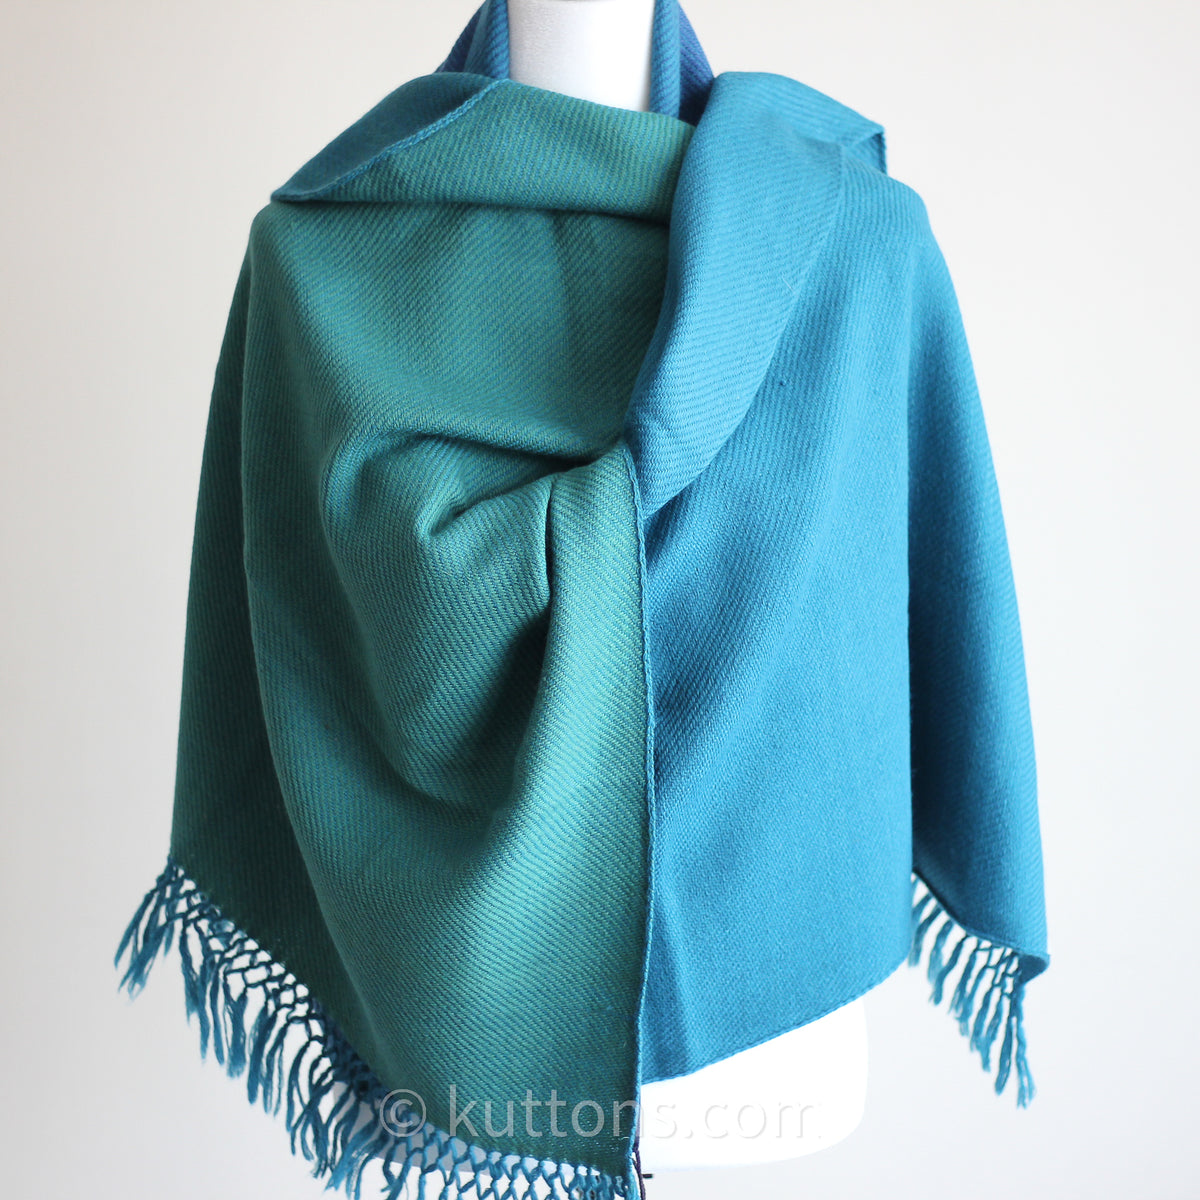 himalayan wool and merino wool handwoven naturally dyed wrap shawl